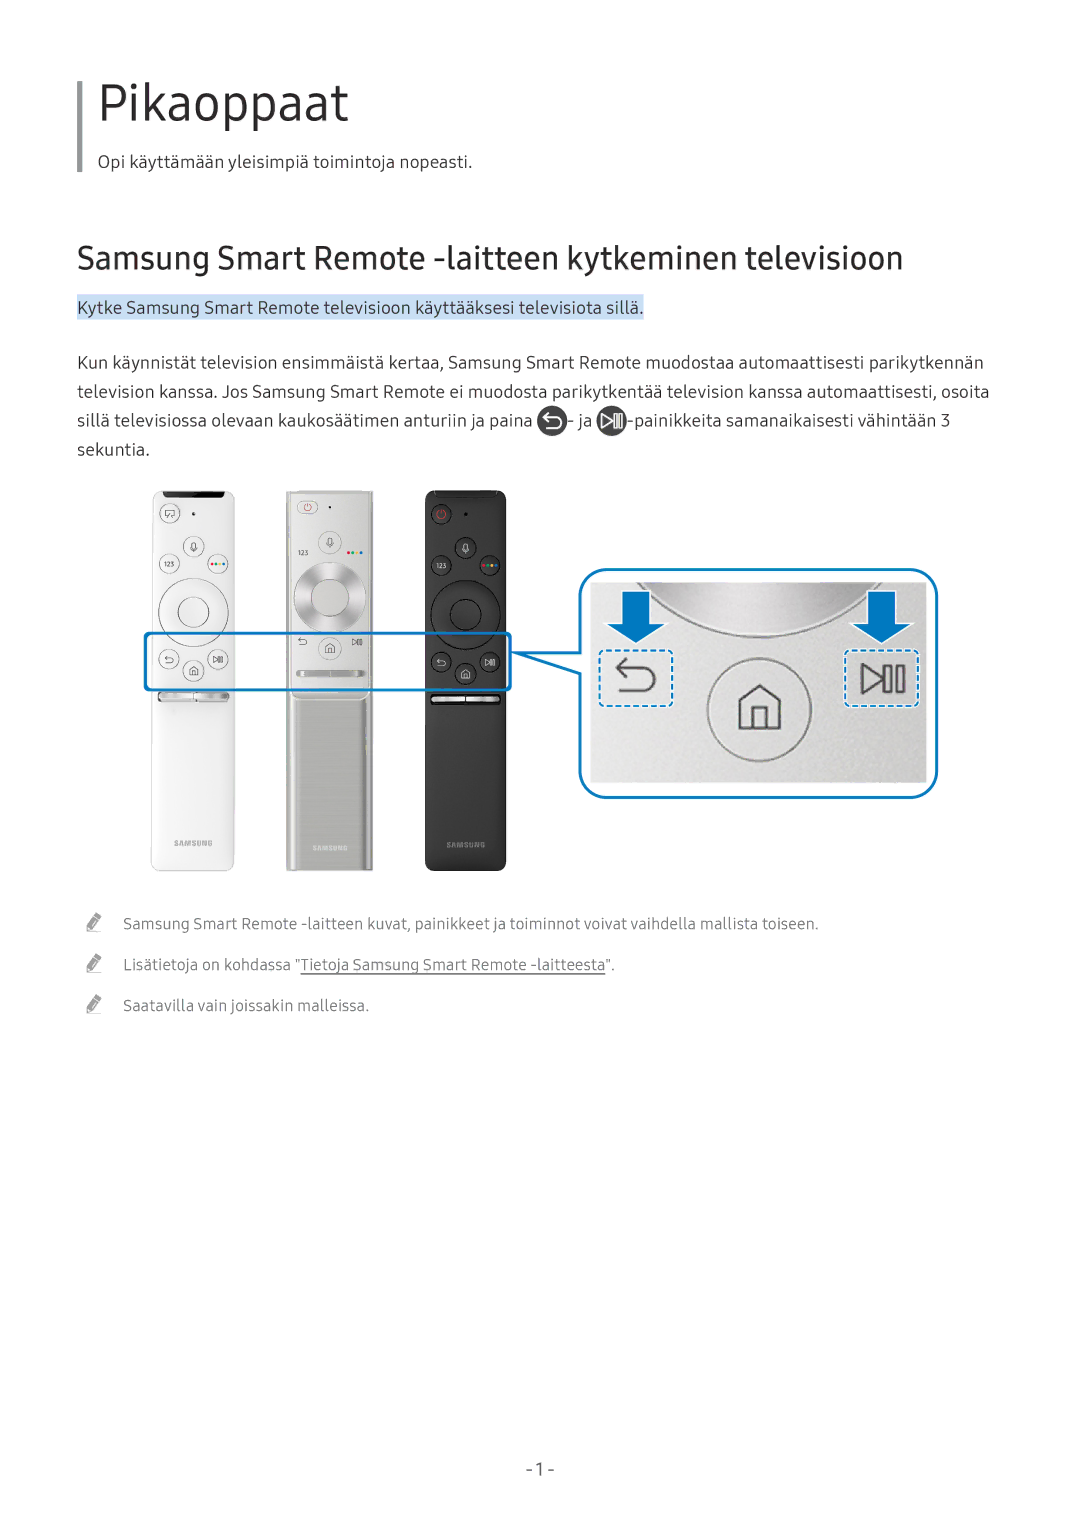 Samsung UE65MU7045TXXC, UE40MU6455UXXC, QE75Q7FAMTXXC Pikaoppaat, Samsung Smart Remote -laitteen kytkeminen televisioon 